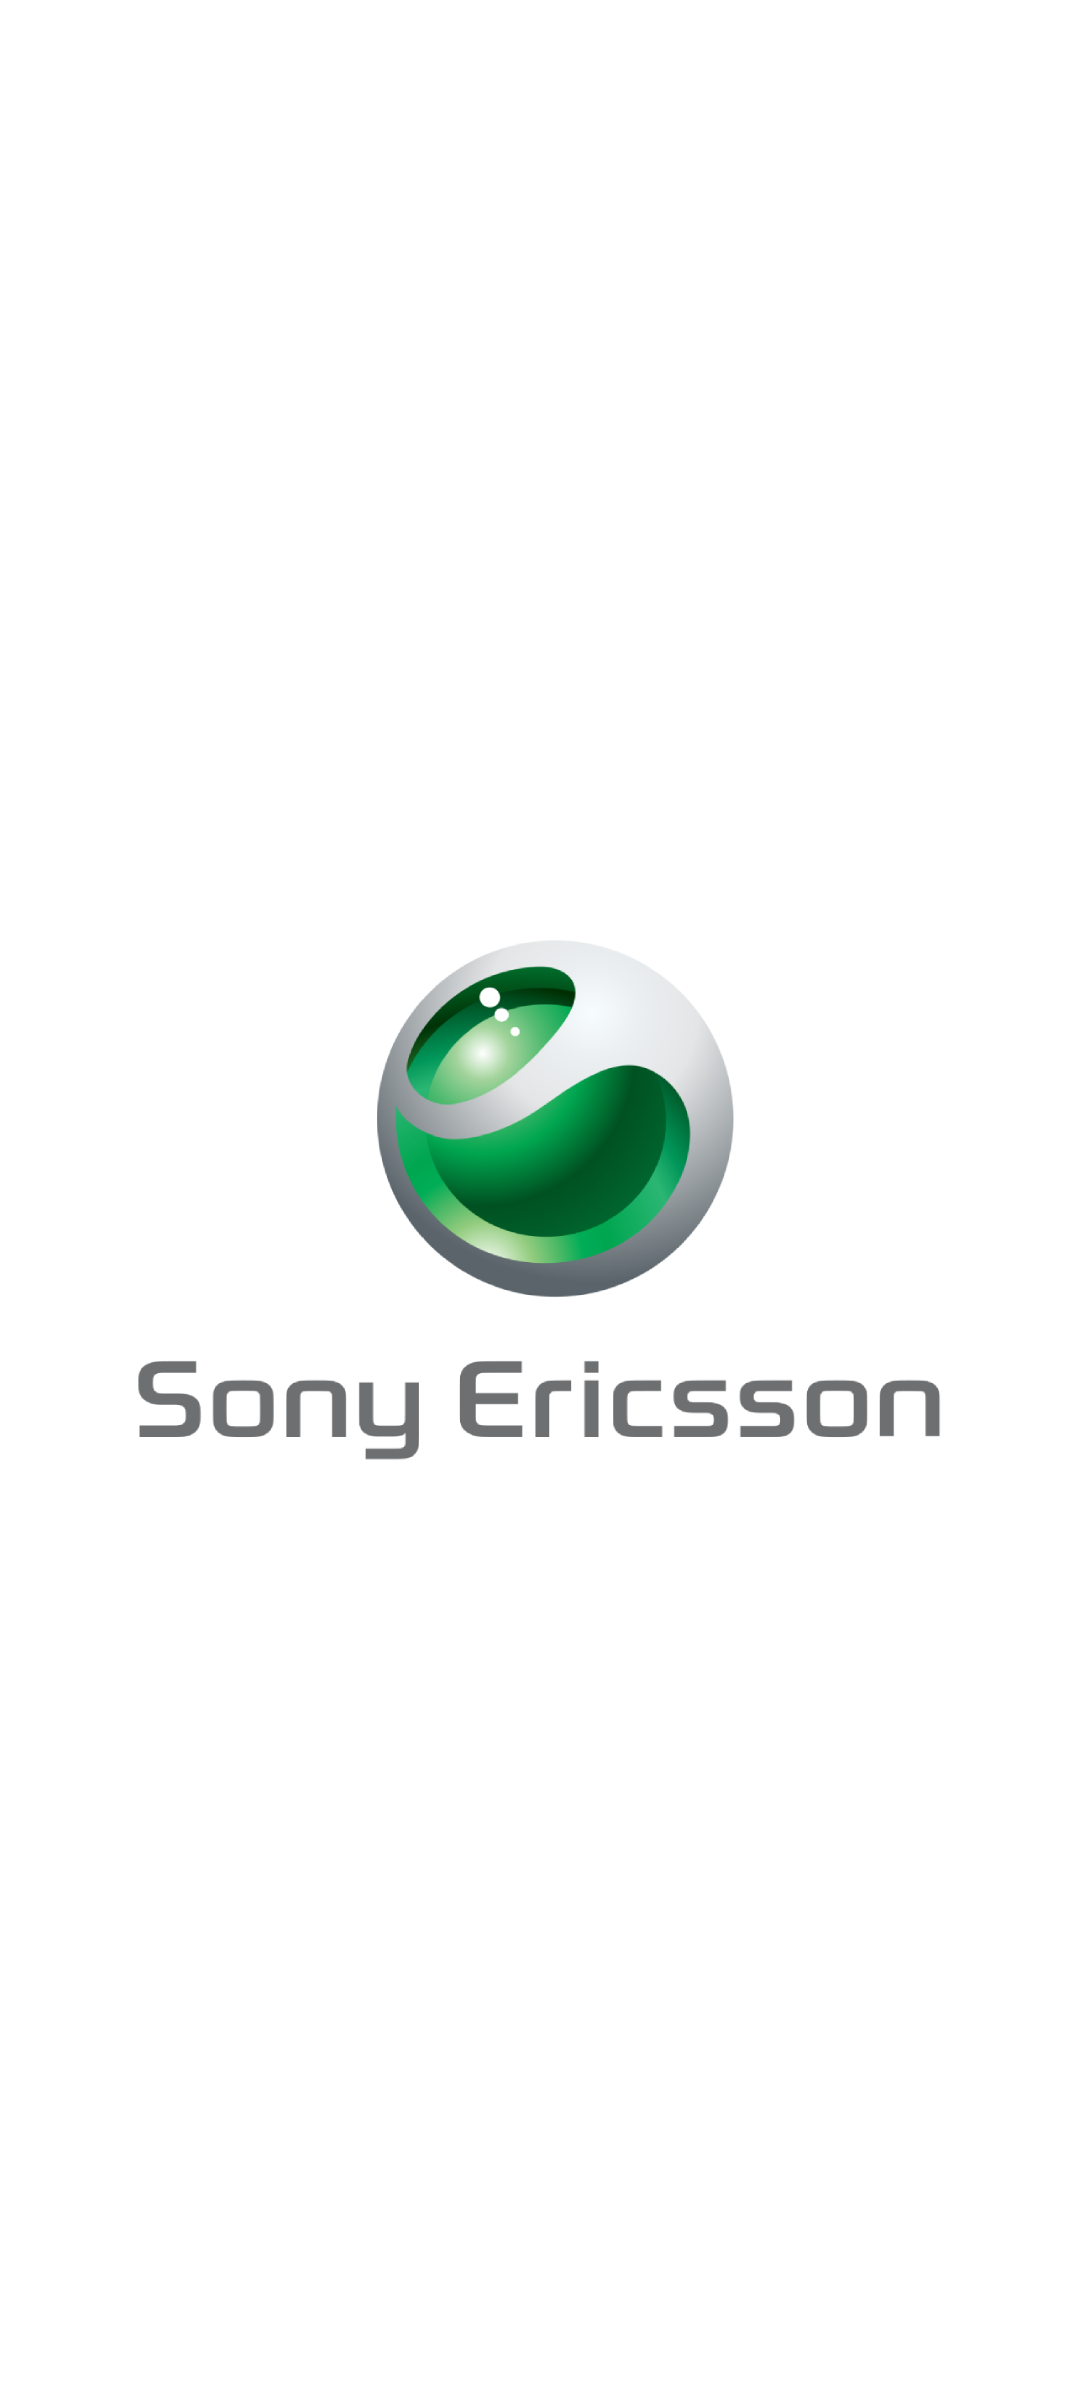 Sony Ericsson ソニーエリクソン Redmi Note 9s 壁紙 待ち受け スマラン